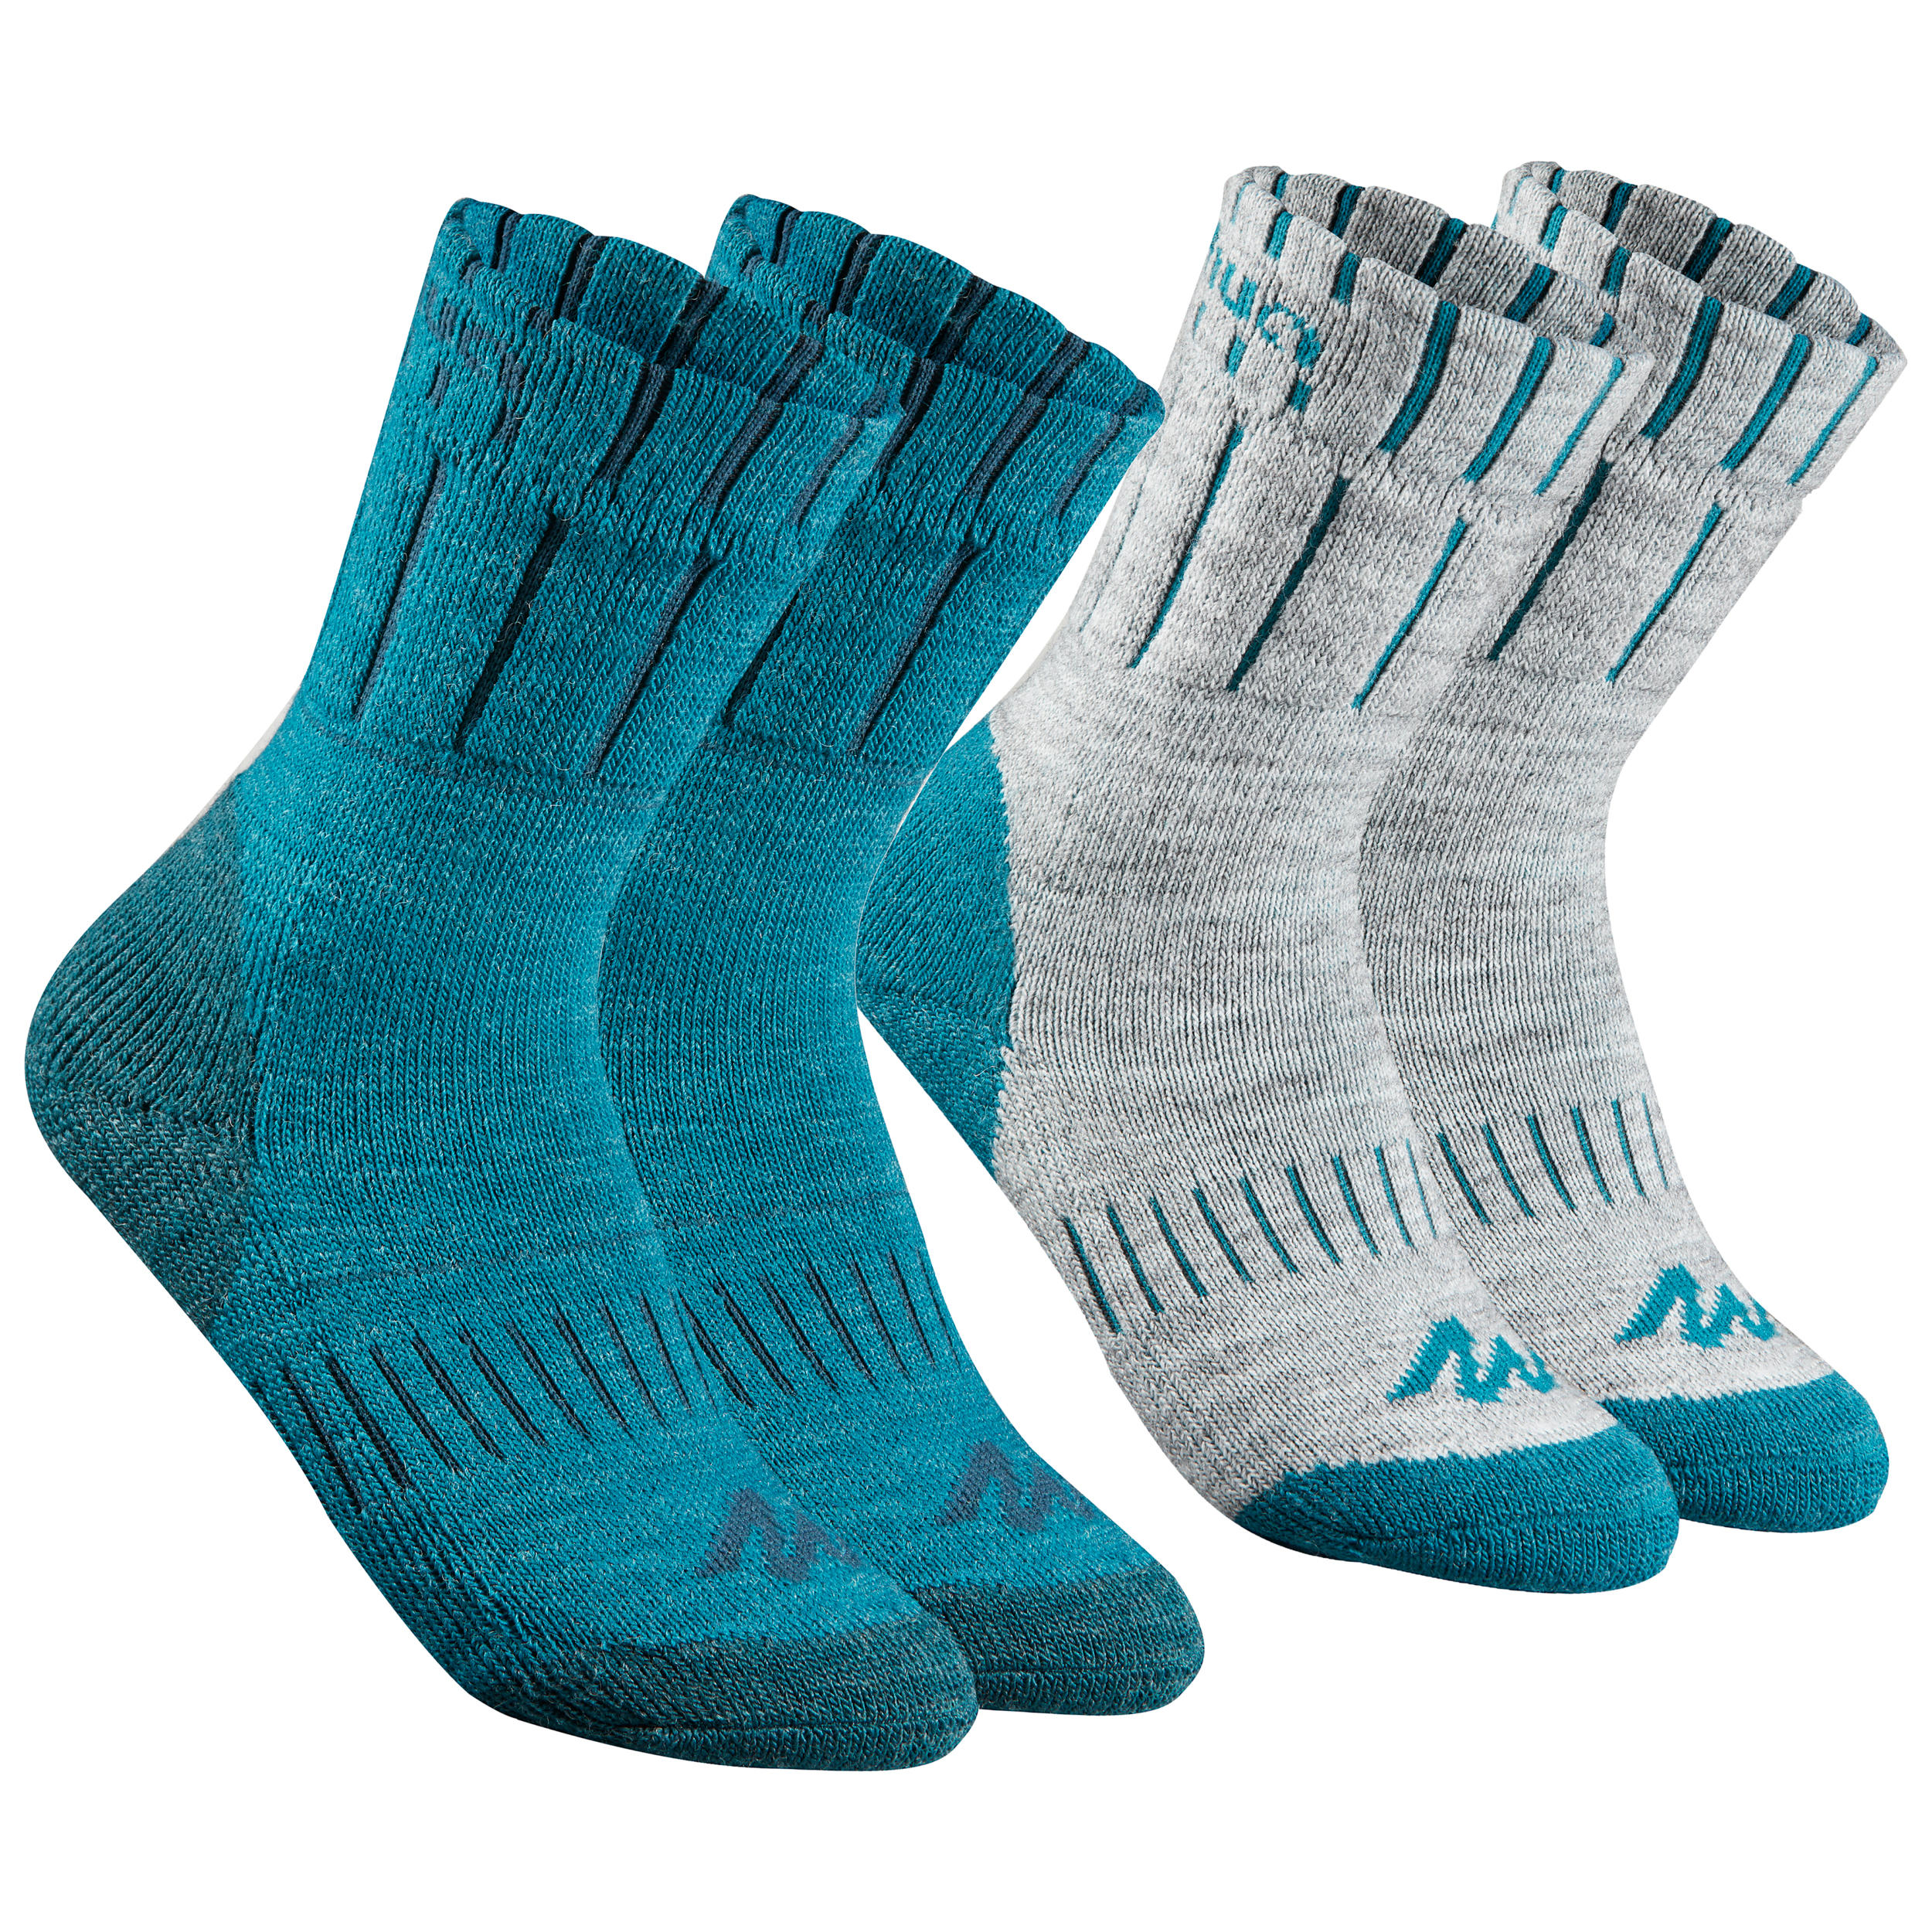 QUECHUA Kids' Warm Walking Socks - 2 Pack - Blue/Grey8558609